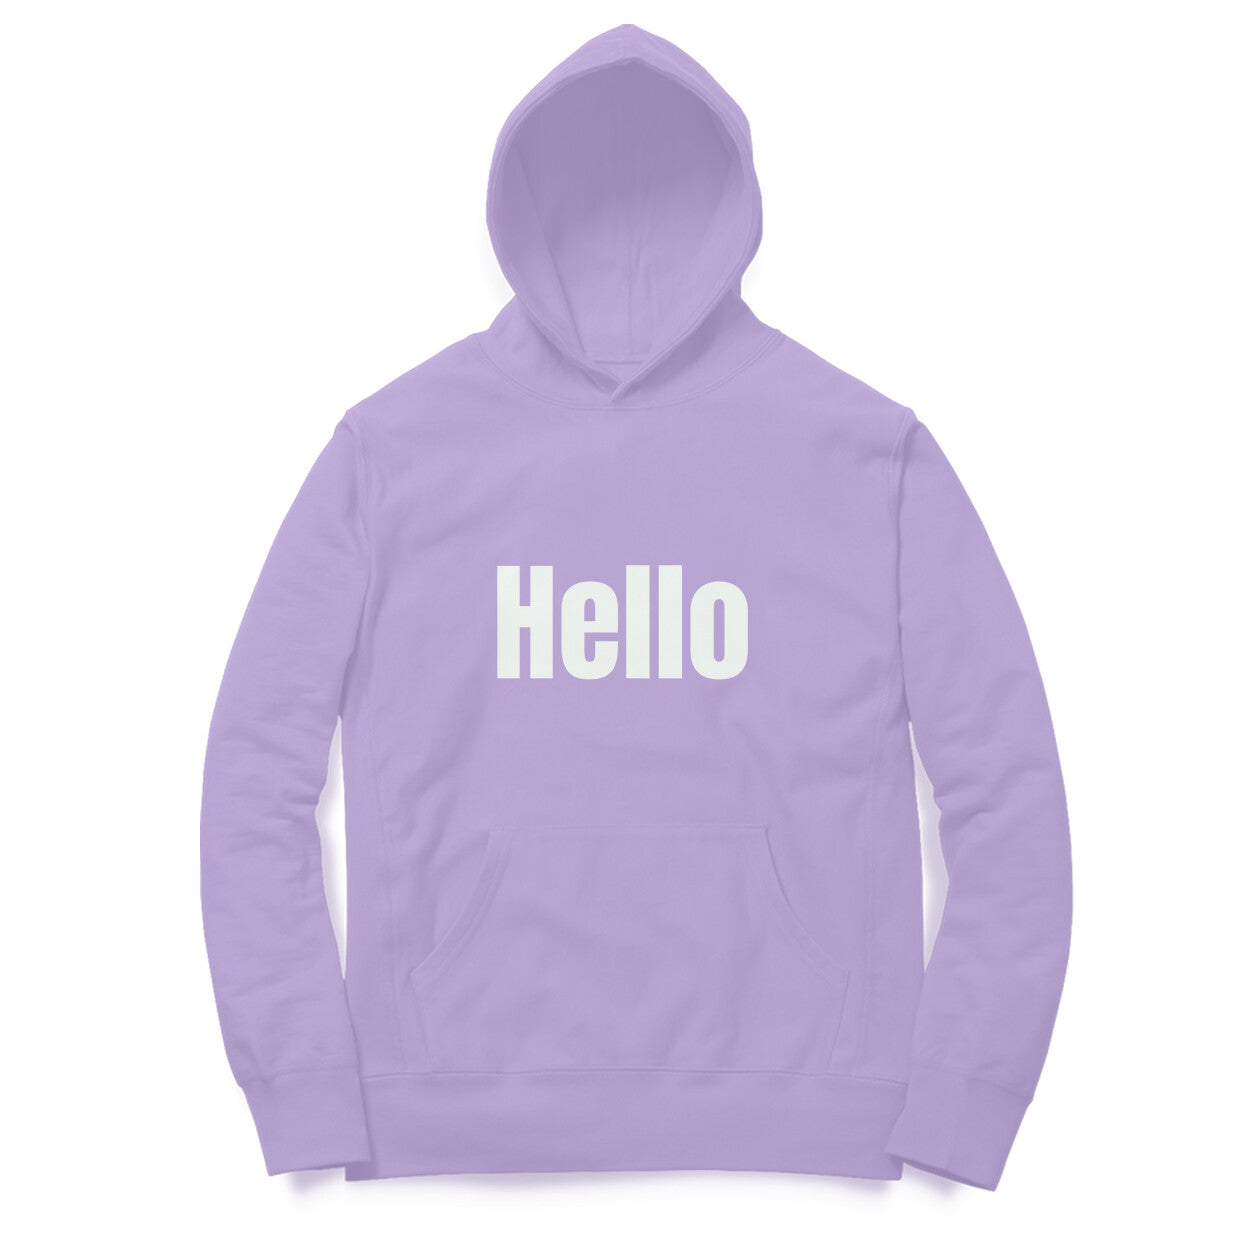 Hello' hoodie